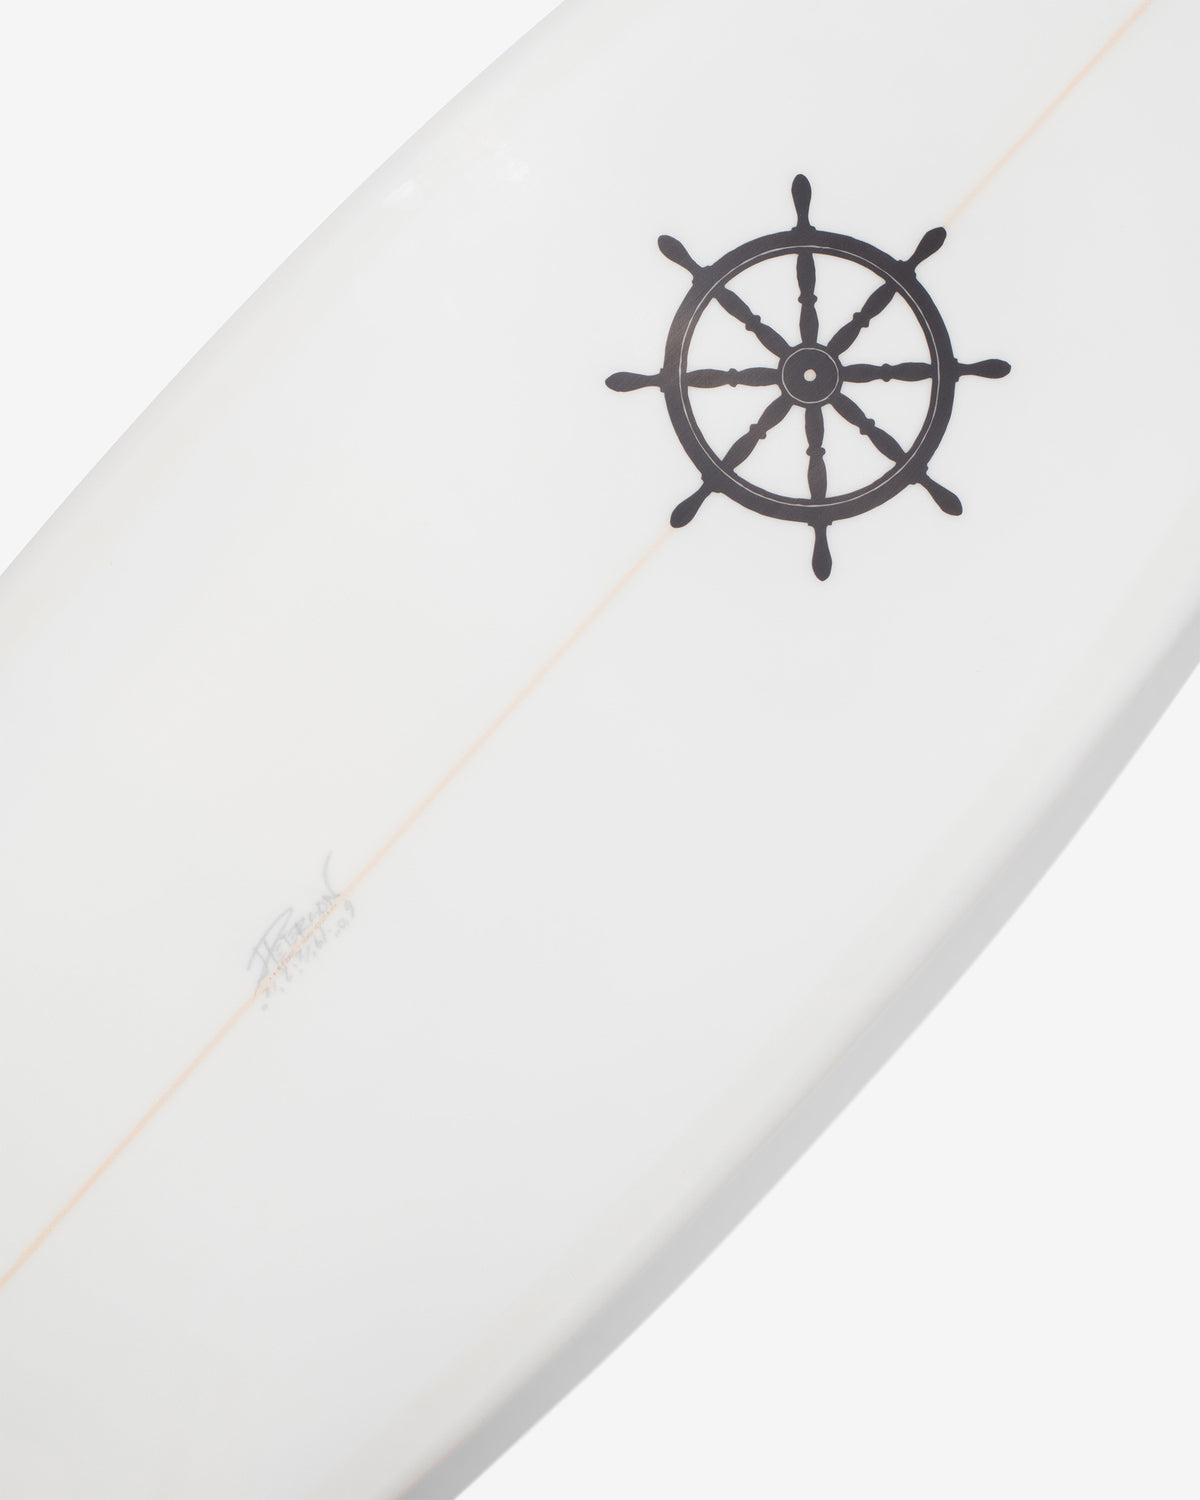 Shipswheel Surfboard